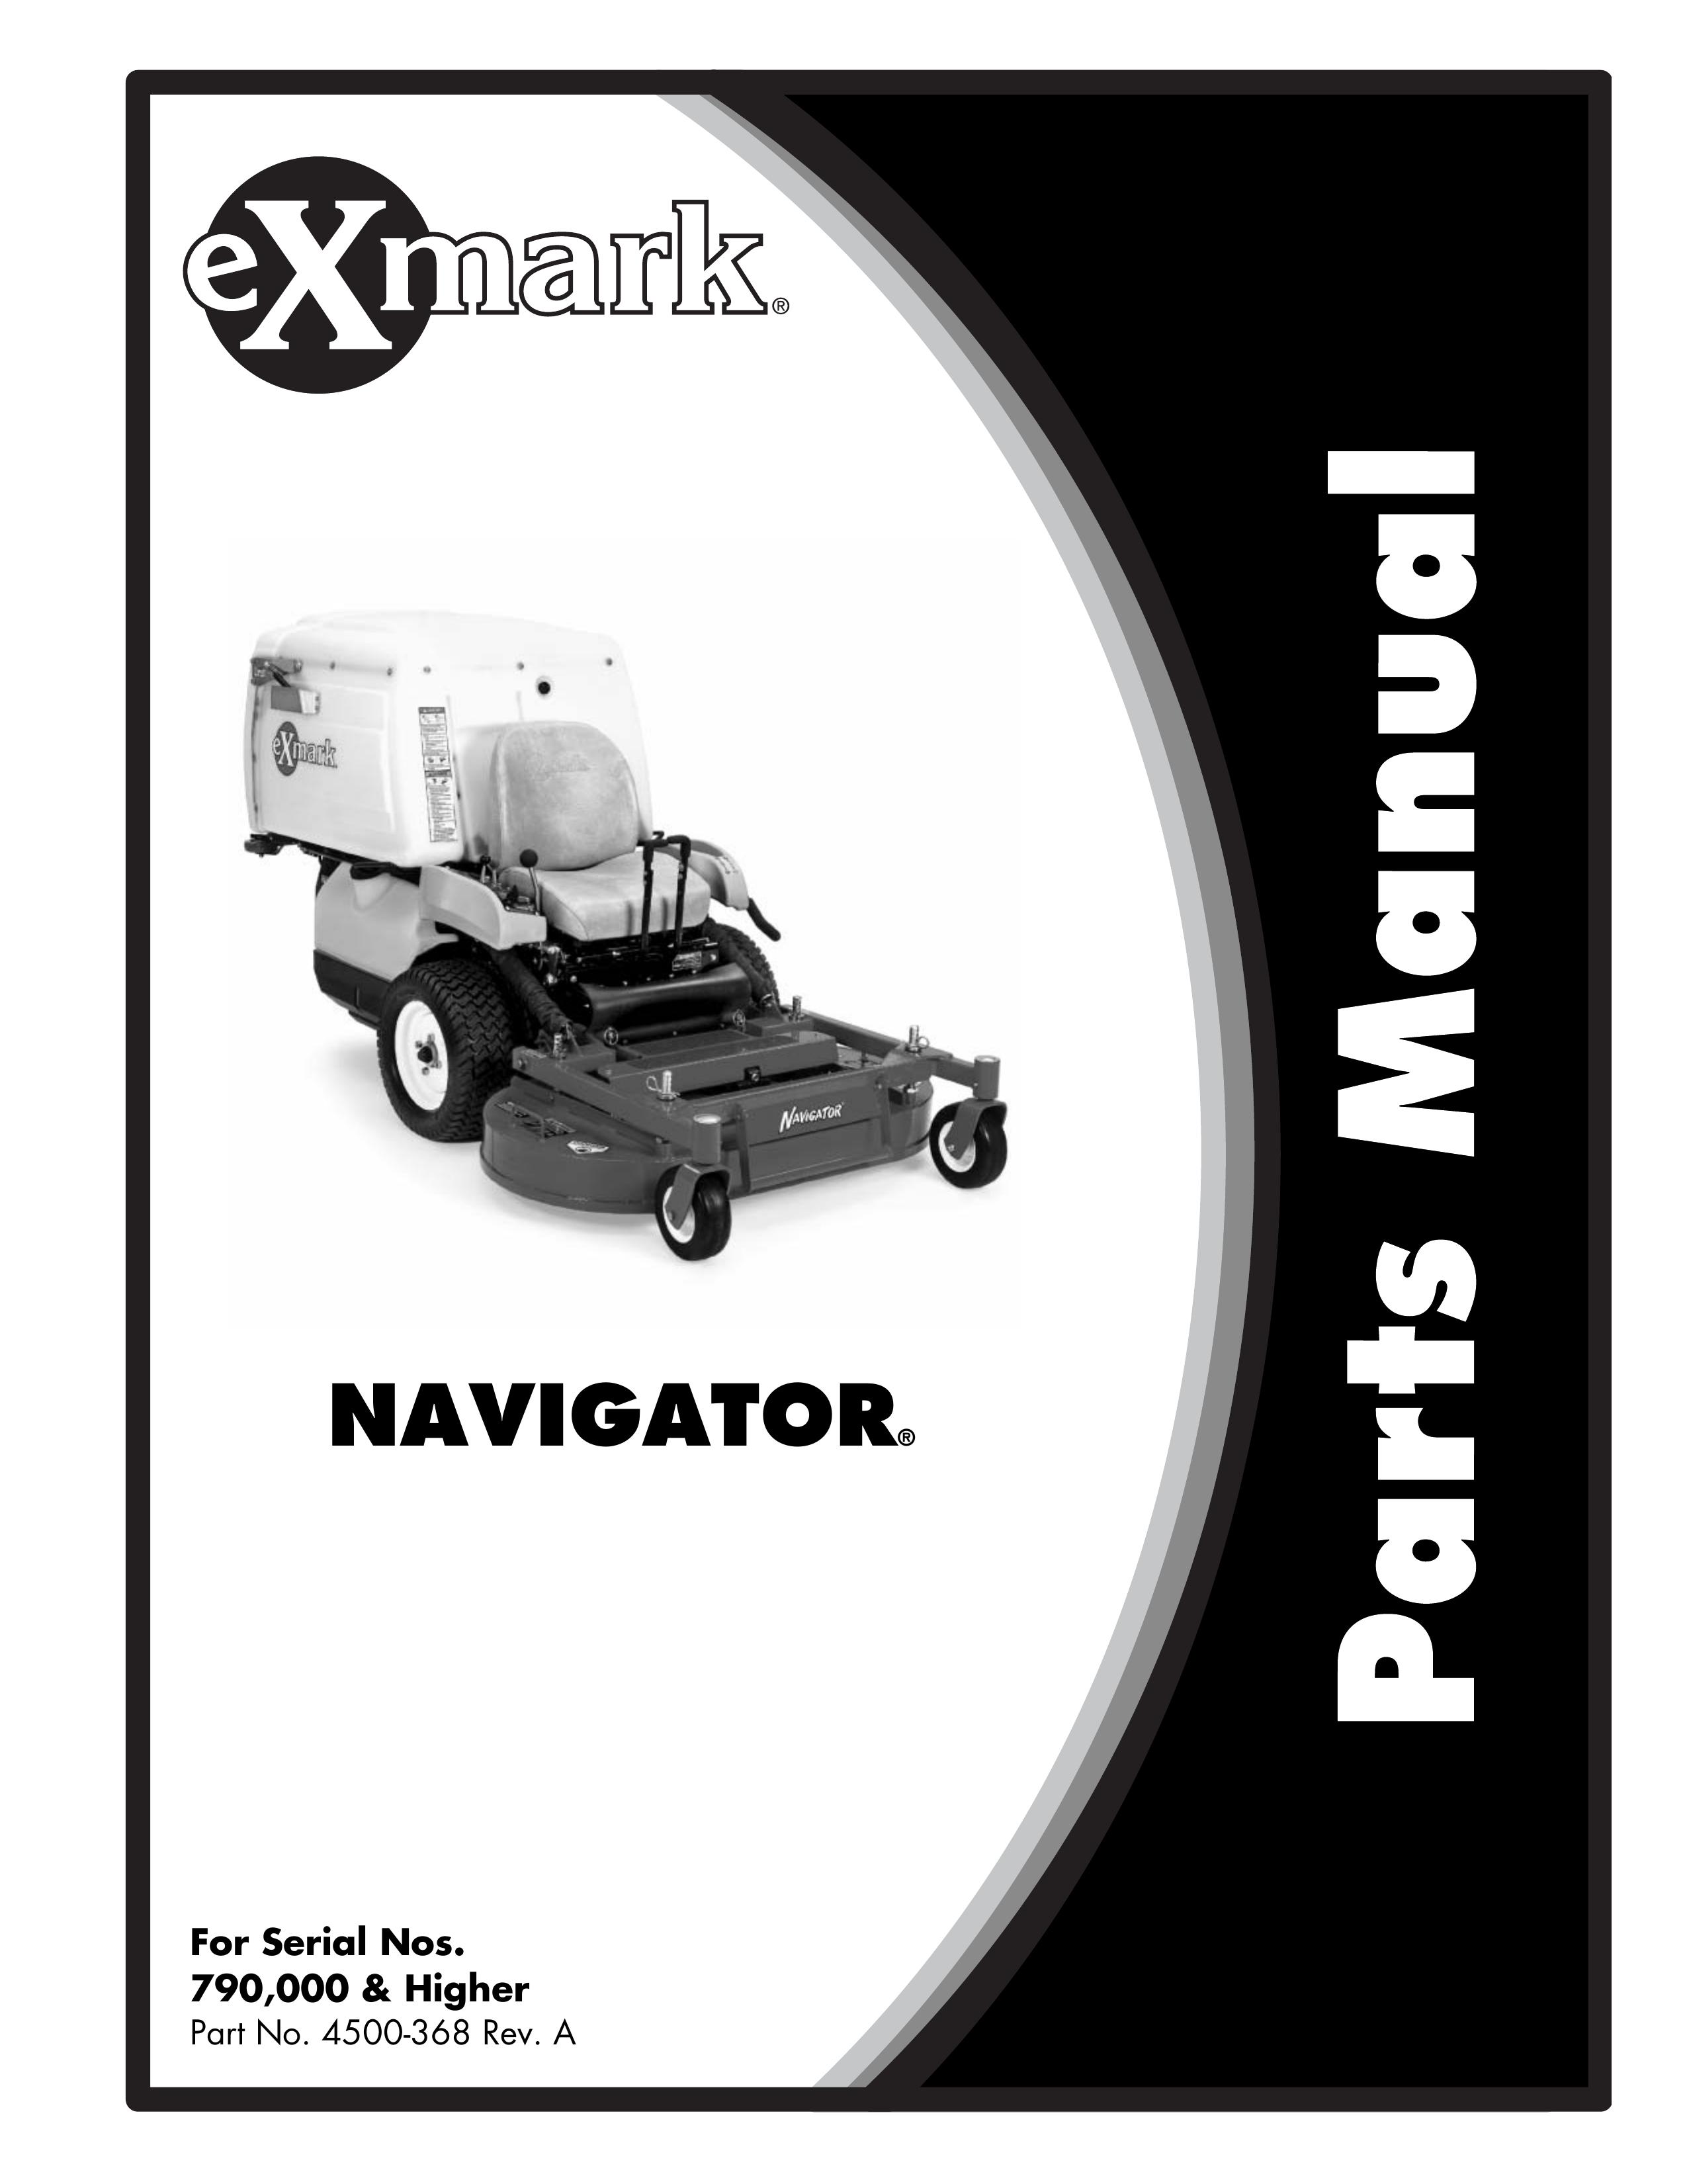 Exmark 4500-368 Lawn Mower User Manual